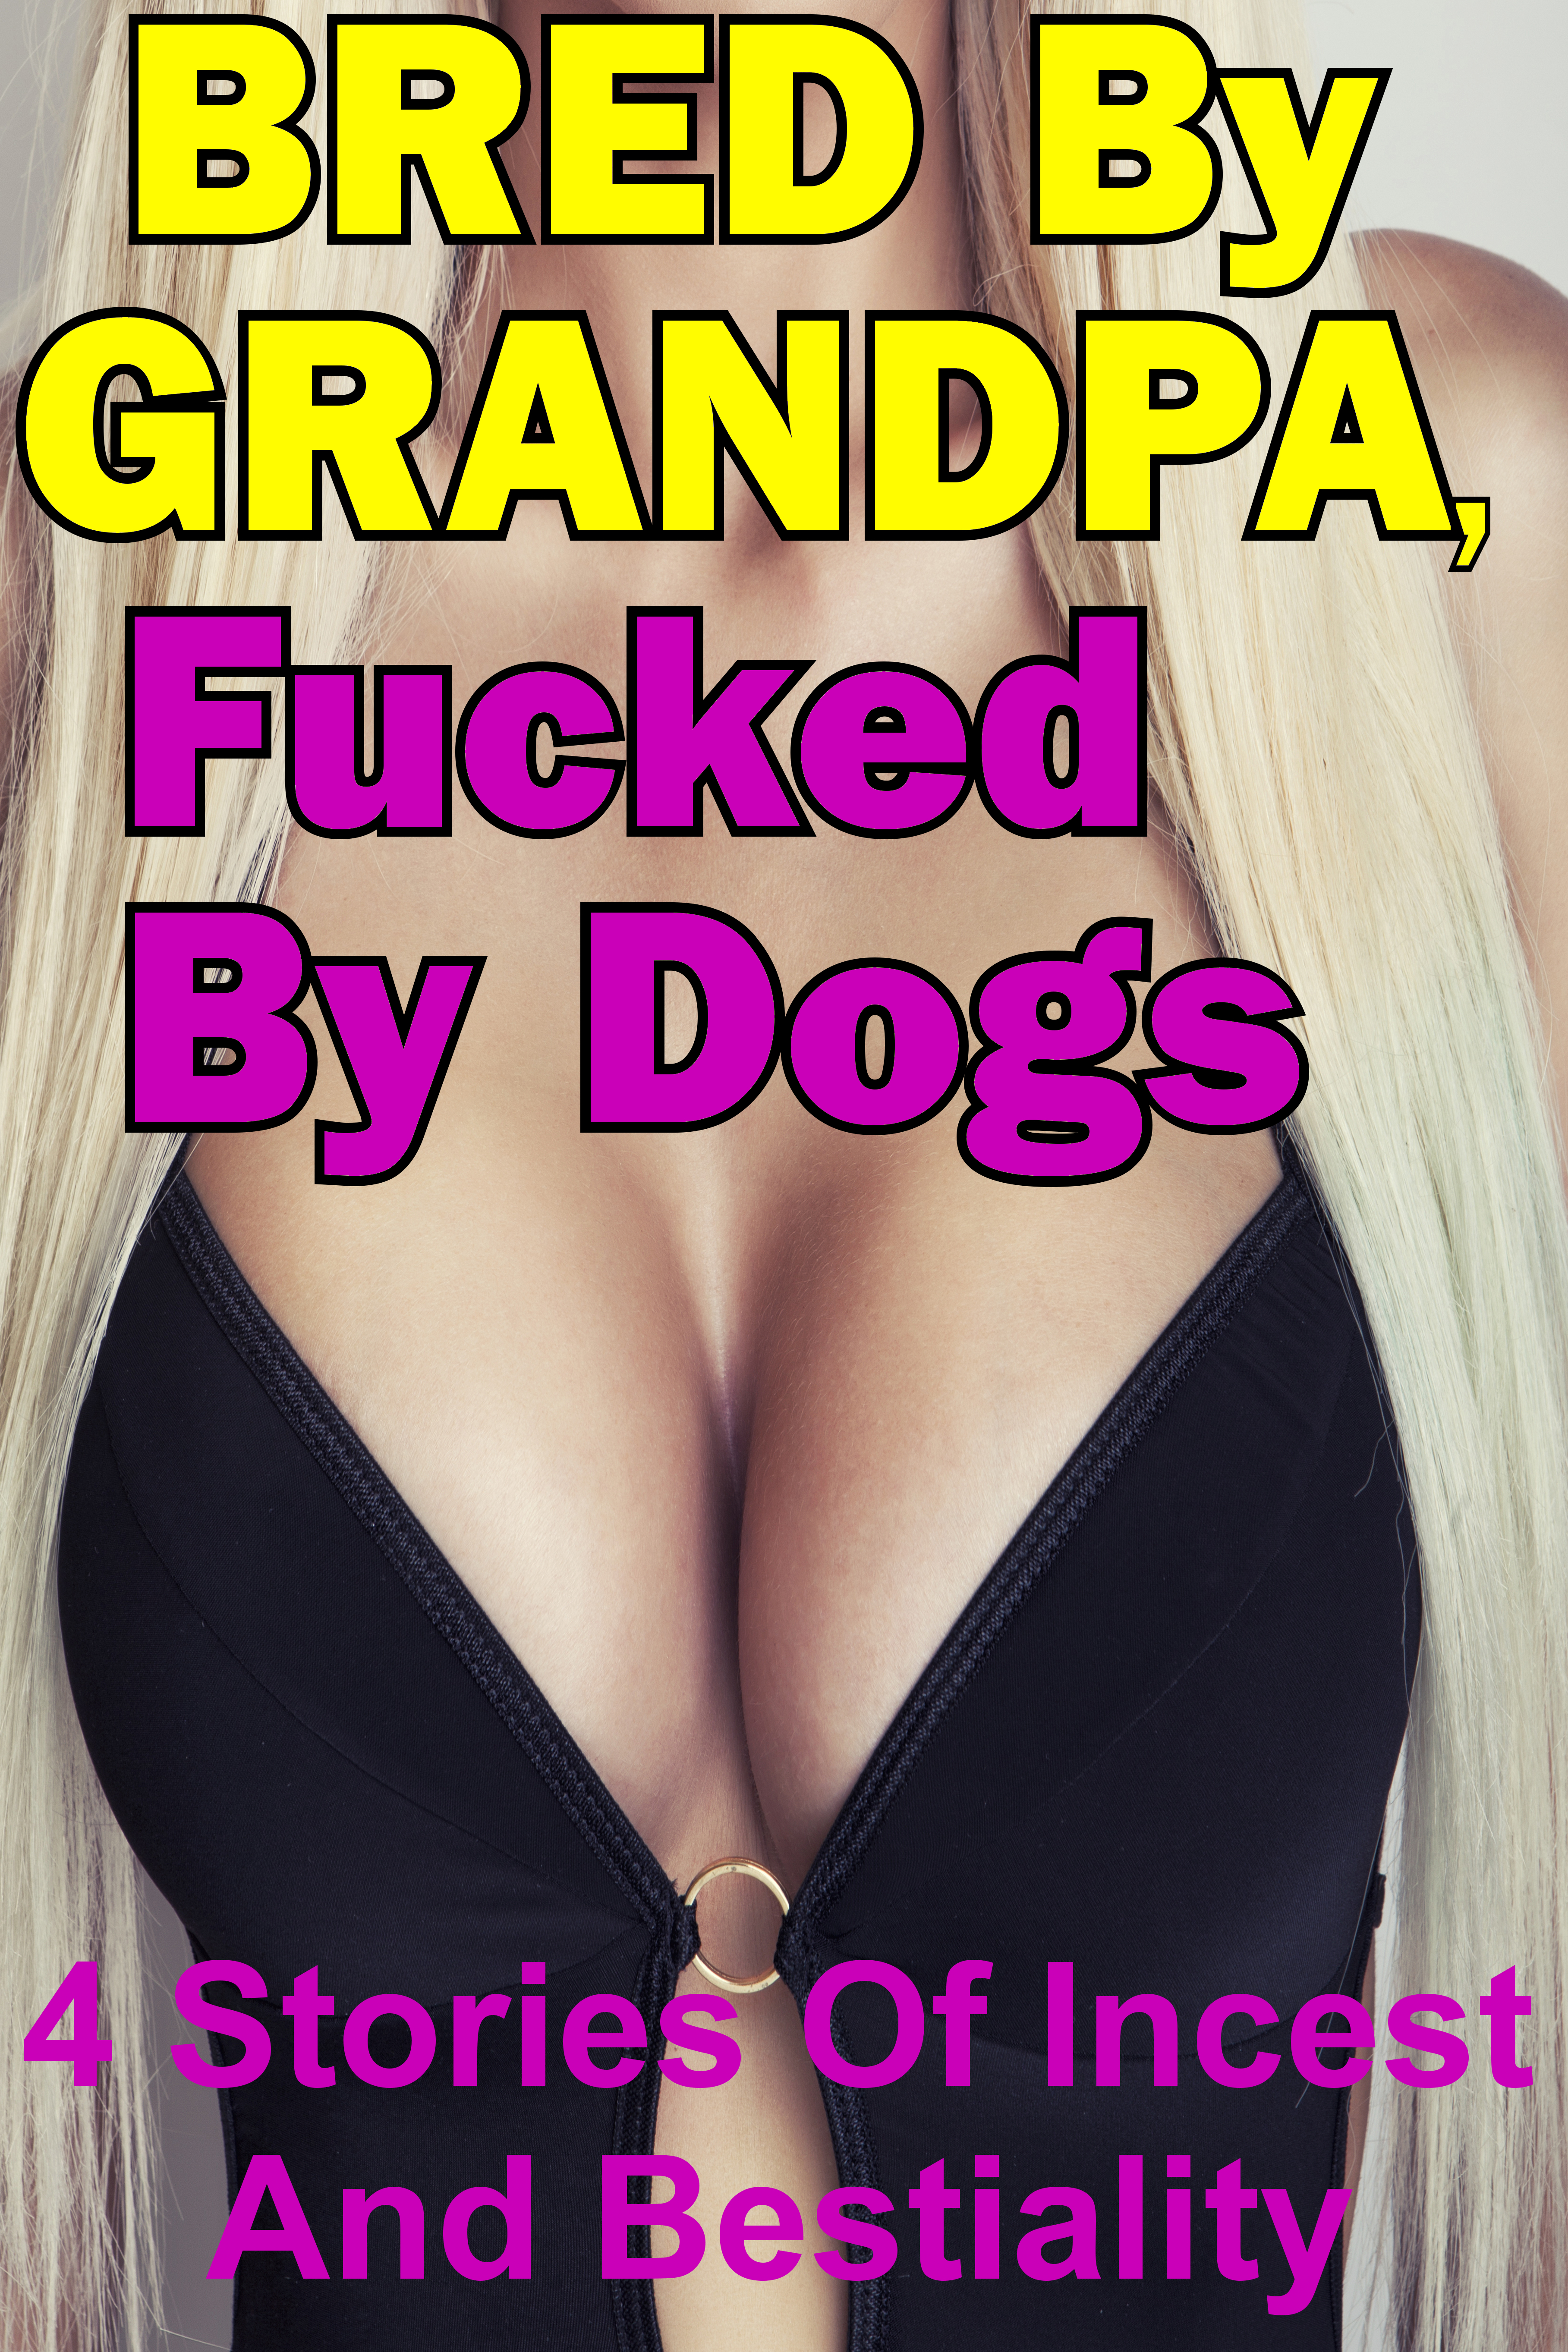 bruce hein add sex with grandpa stories photo